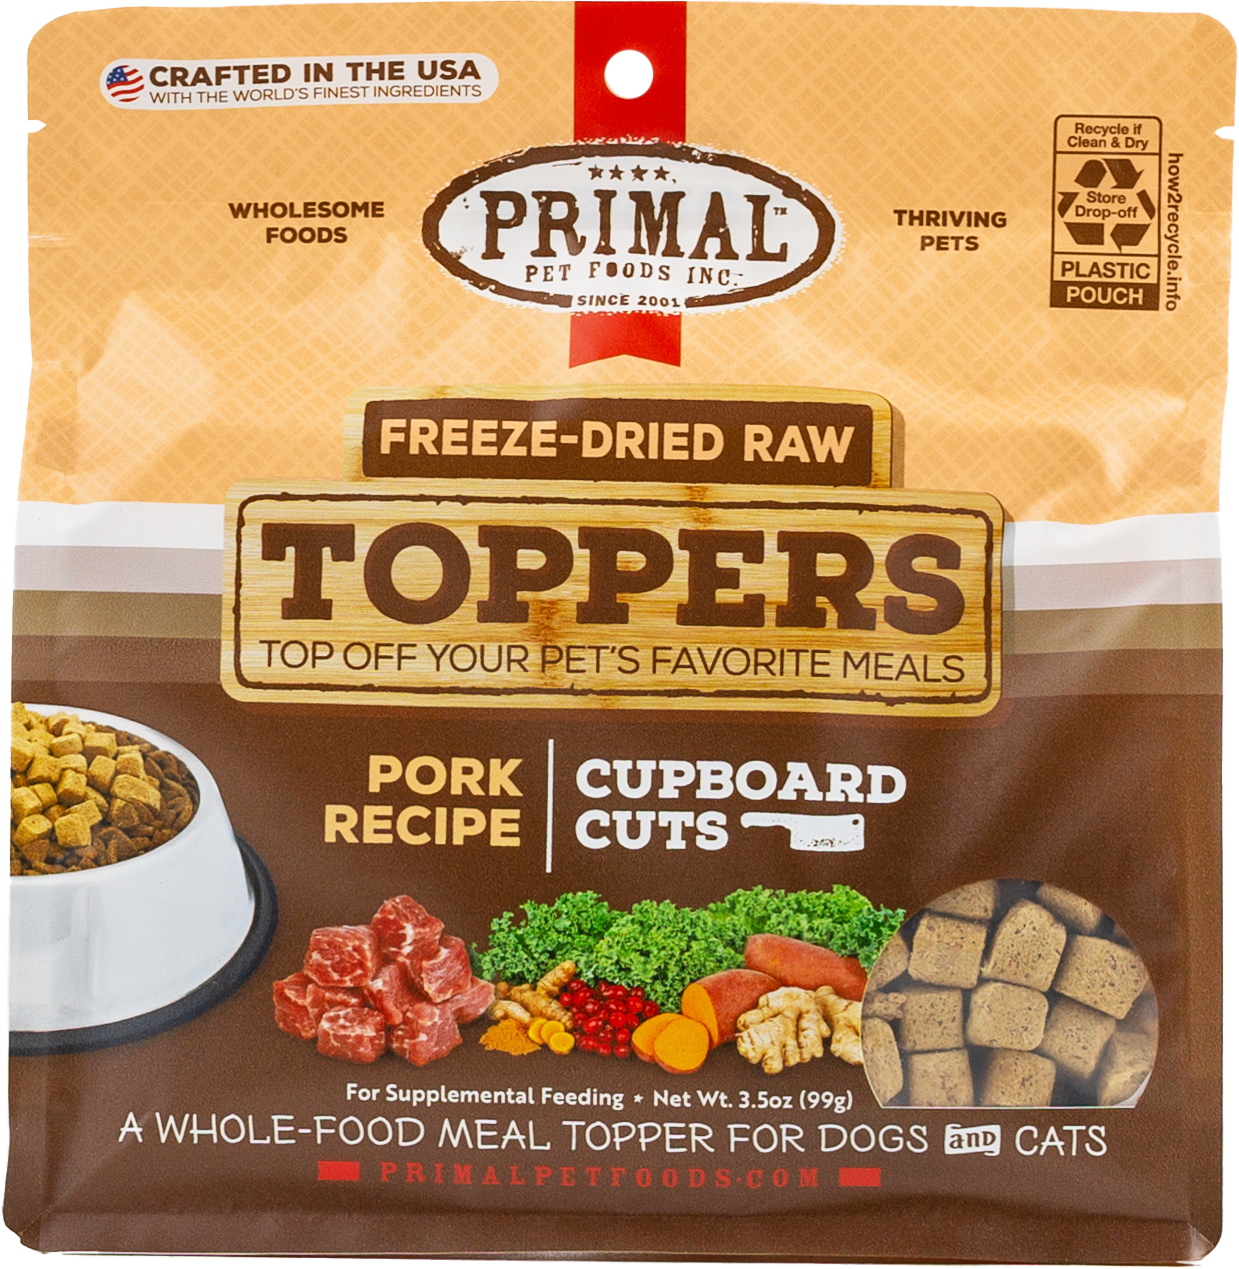 Primal Cupboard Cuts Freeze-Dried Raw Toppers - Pork, 3.5 oz